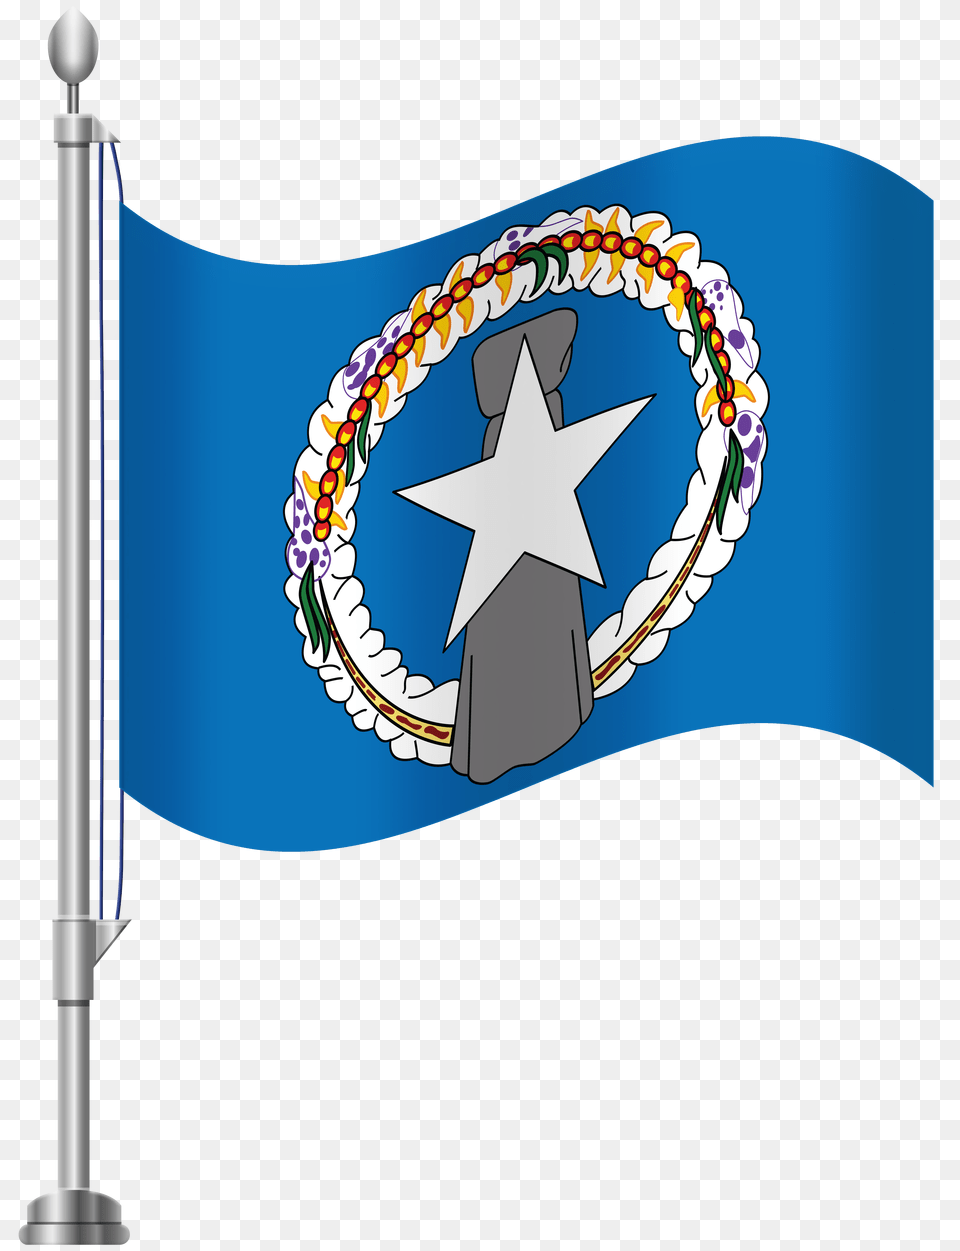 Northern Mariana Islands Flag Clip Art, Symbol, Smoke Pipe Png Image